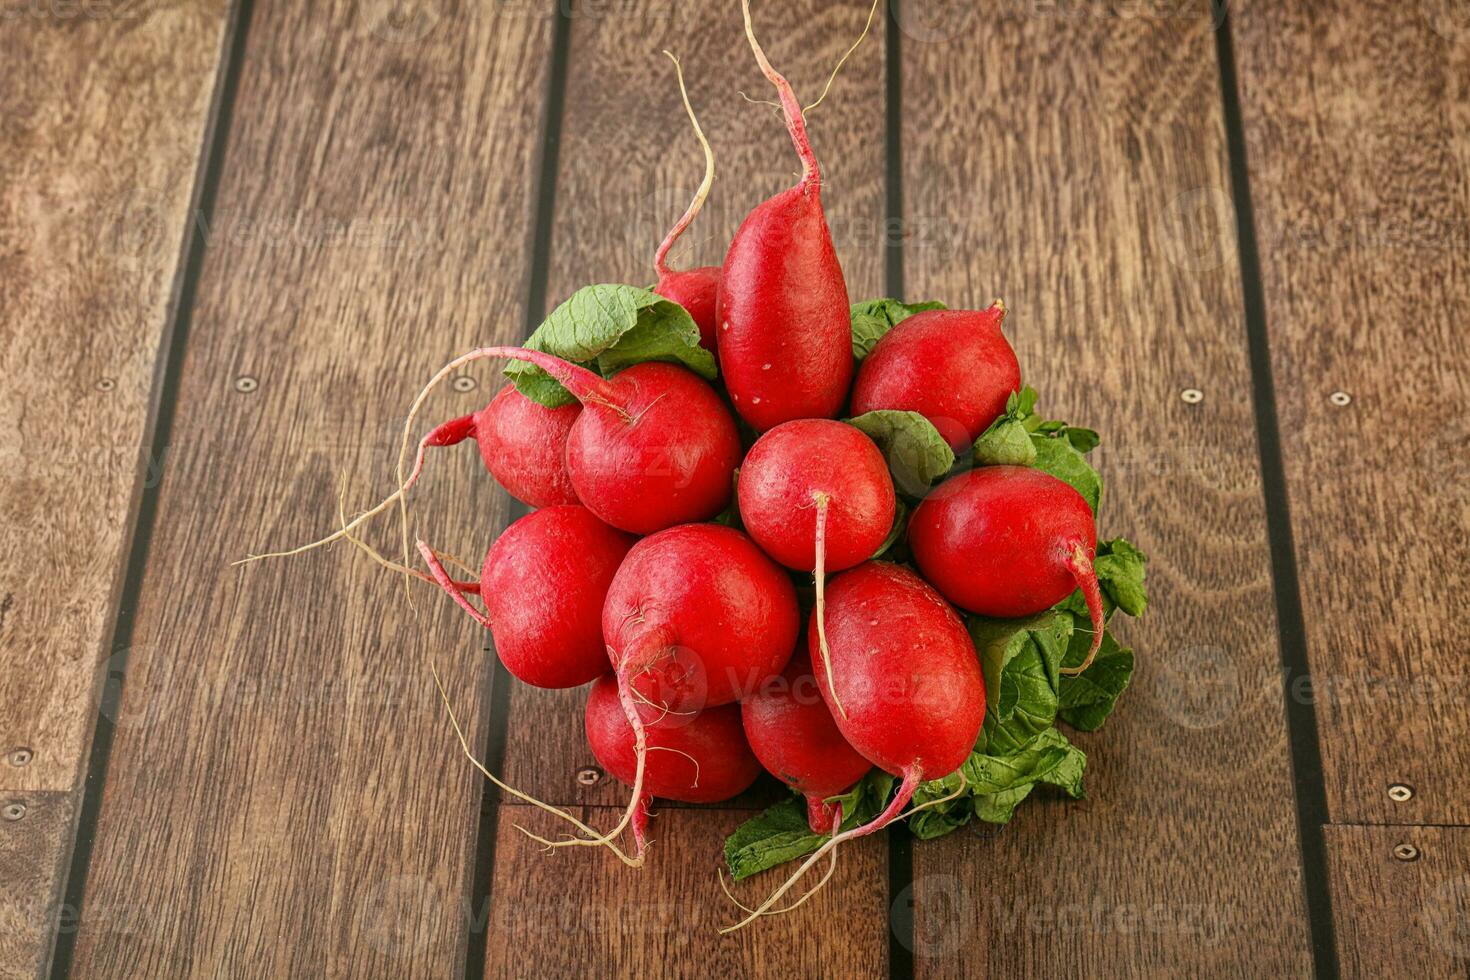 Heap ripe fresh red radish photo